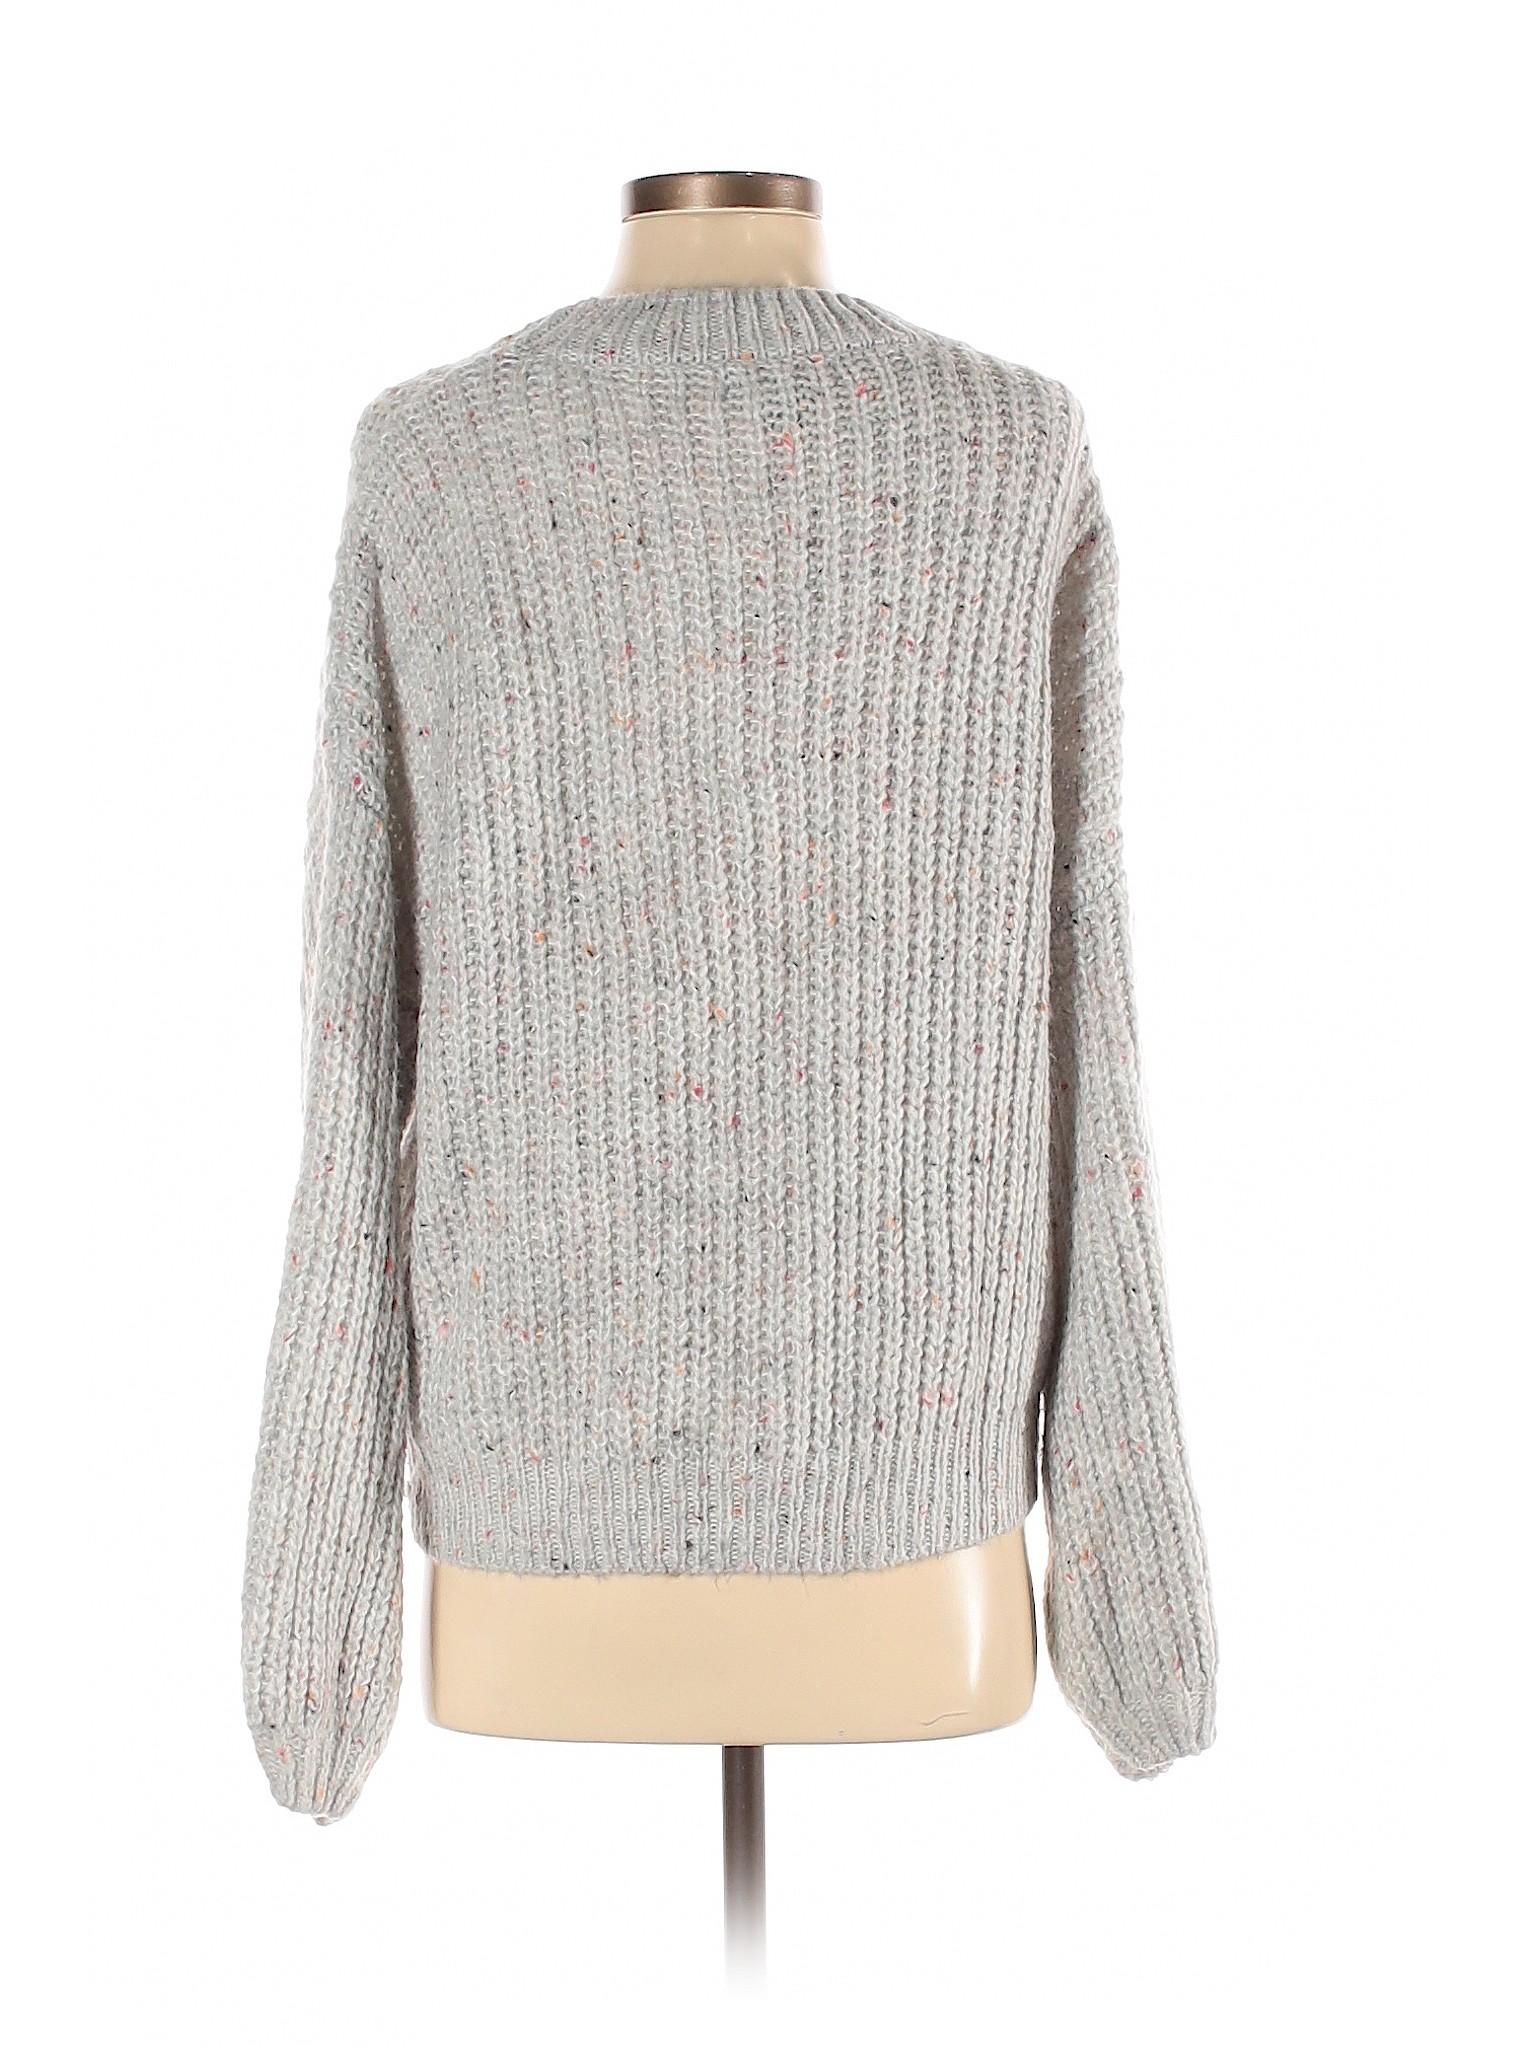 Primark Women Gray Pullover Sweater S | eBay